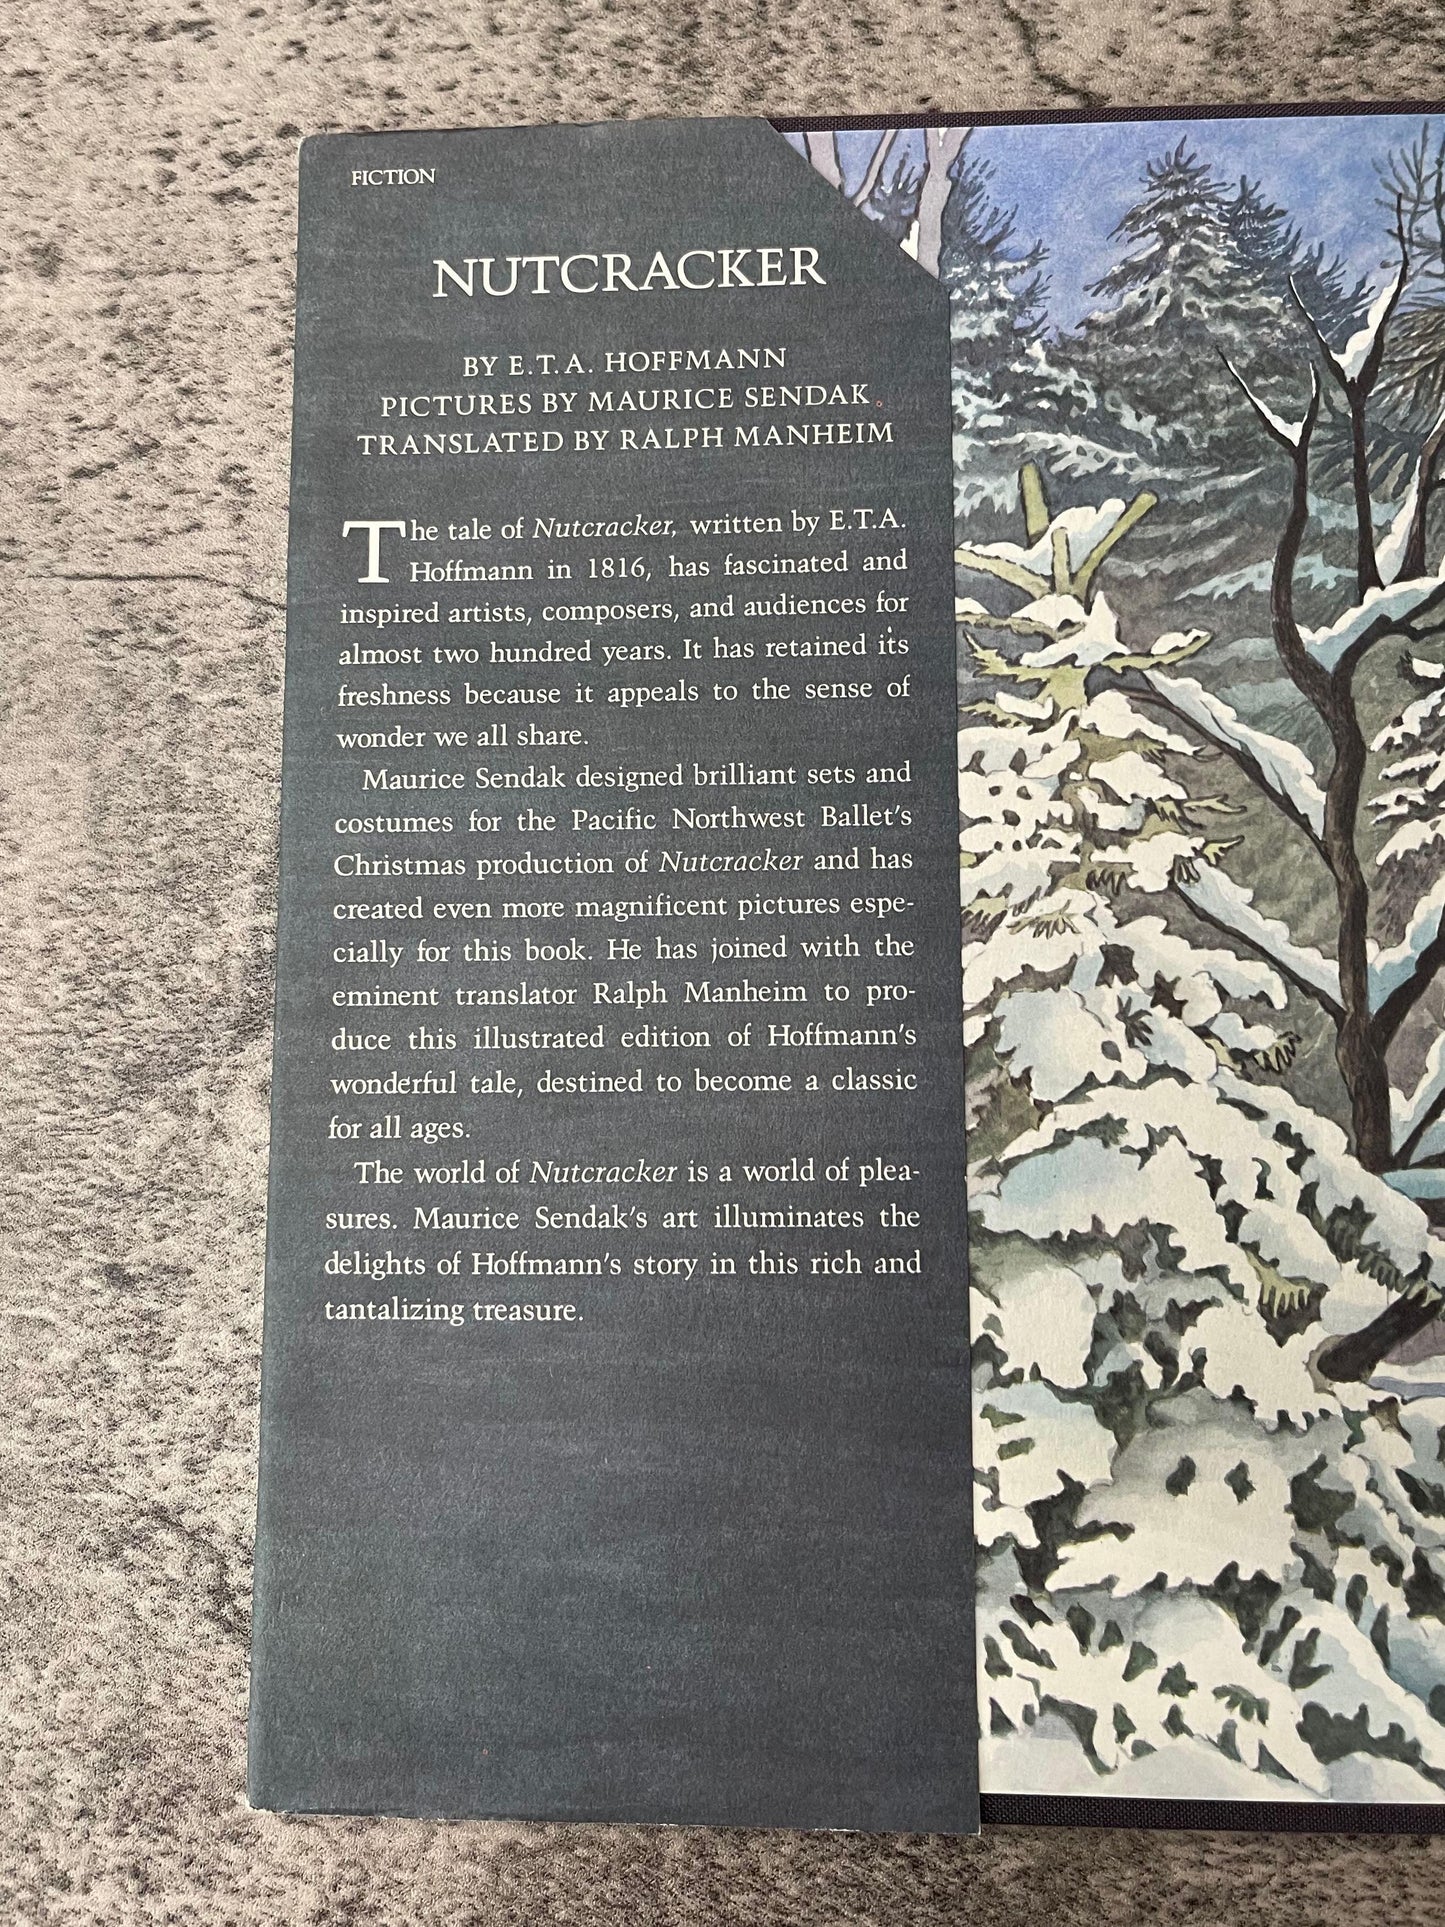 Nutcracker / Pictures by Maurice Sendak / 1989 - Precious Cache